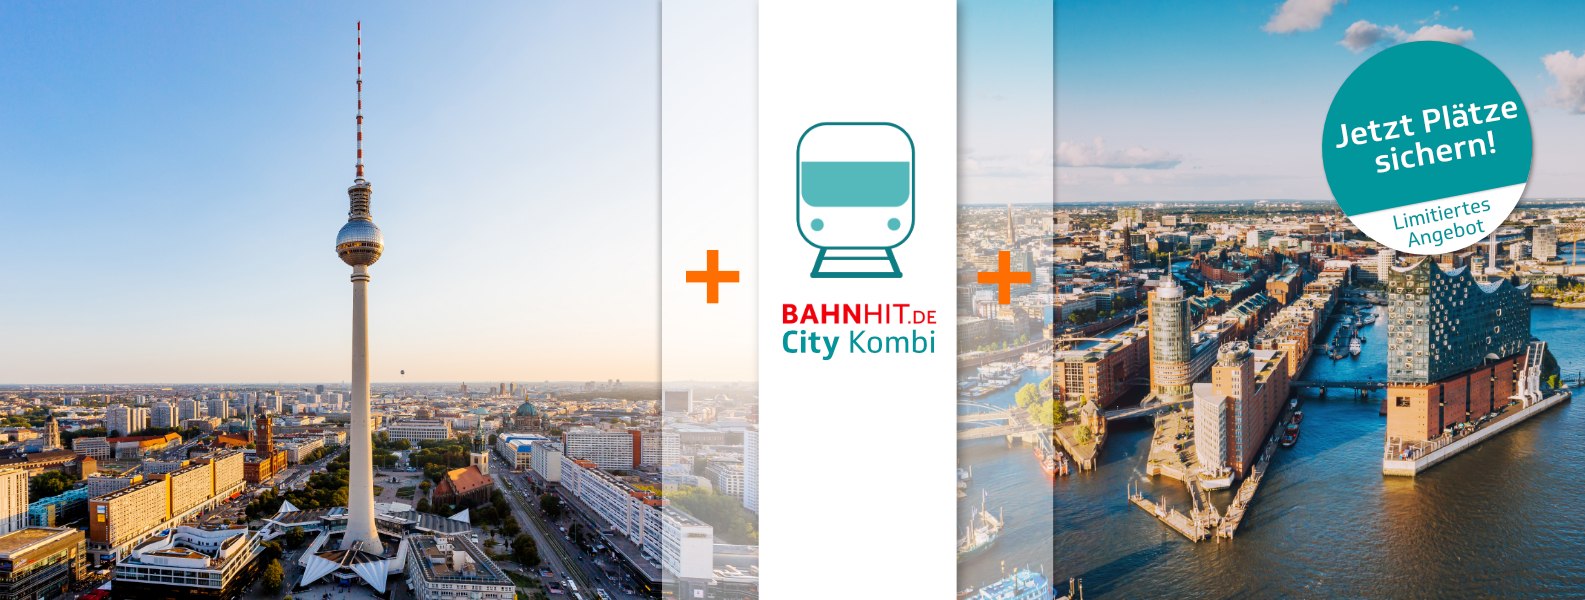 HeroImage_Bahnhit-City-Kombi-B-HH_Berlin, © GettyImages, Alexander Spatari &amp; Hamburg GettyImages, Nikada